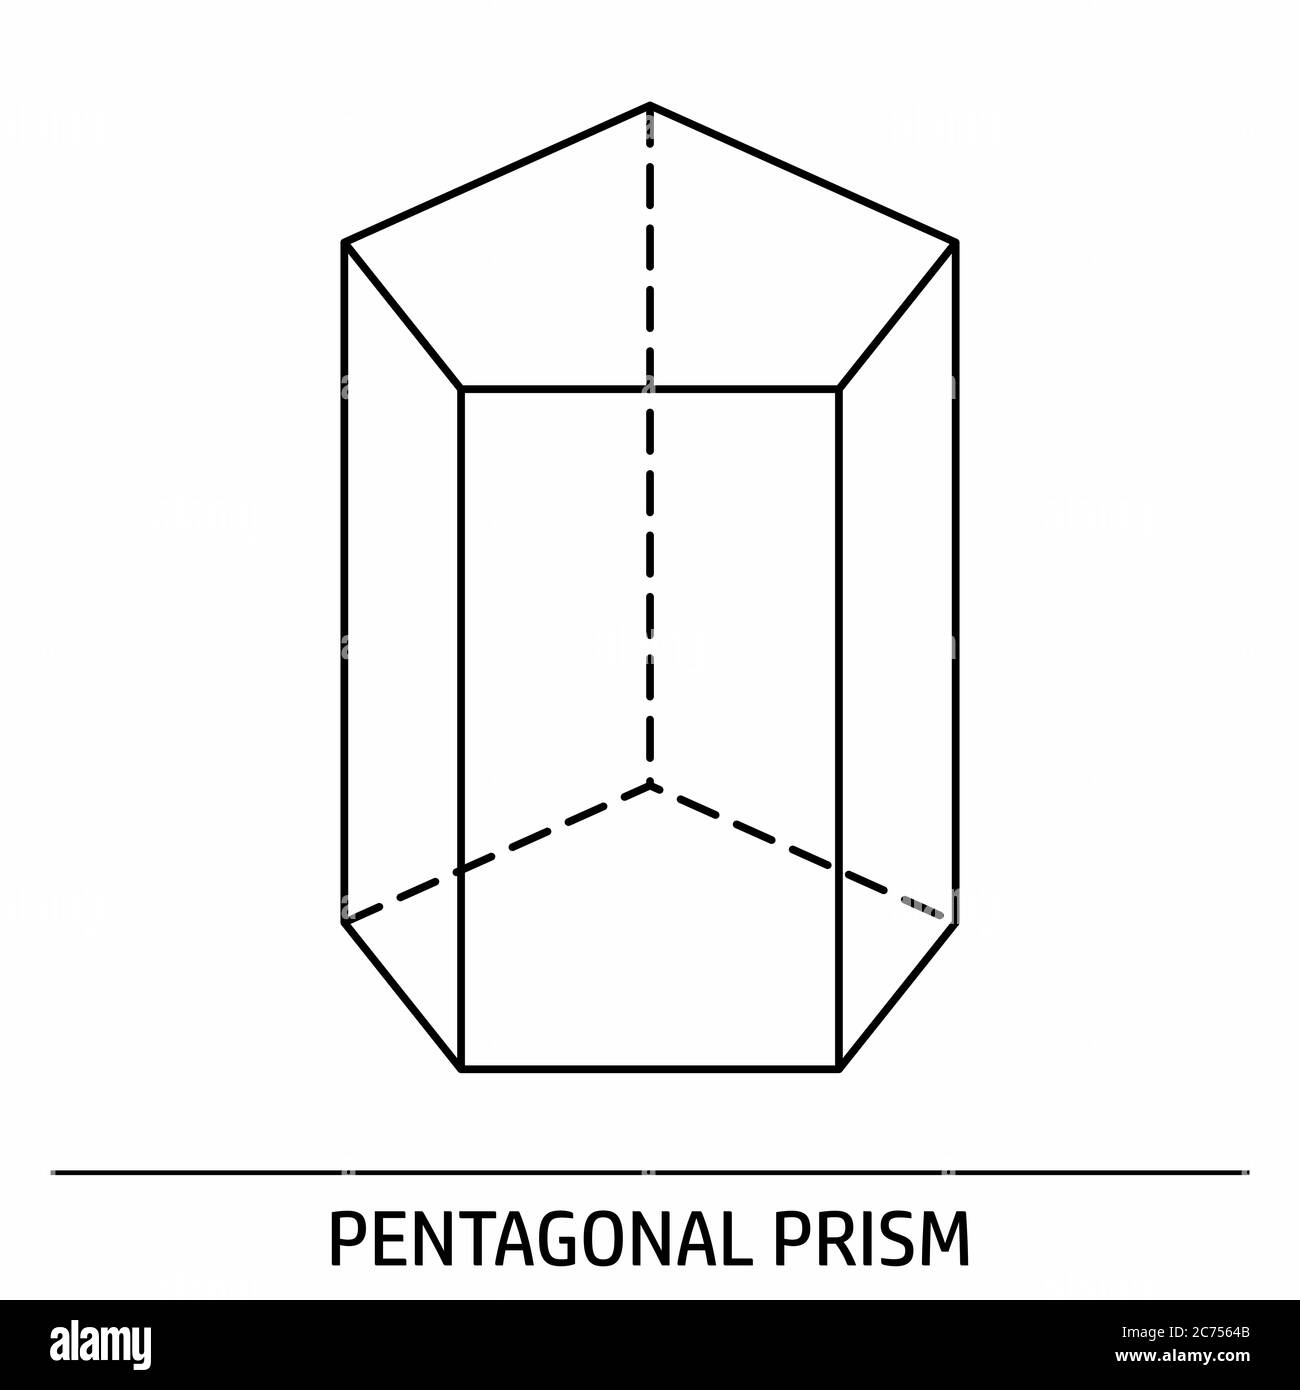 Prisma pentagonal fotografías e imágenes de alta resolución - Alamy